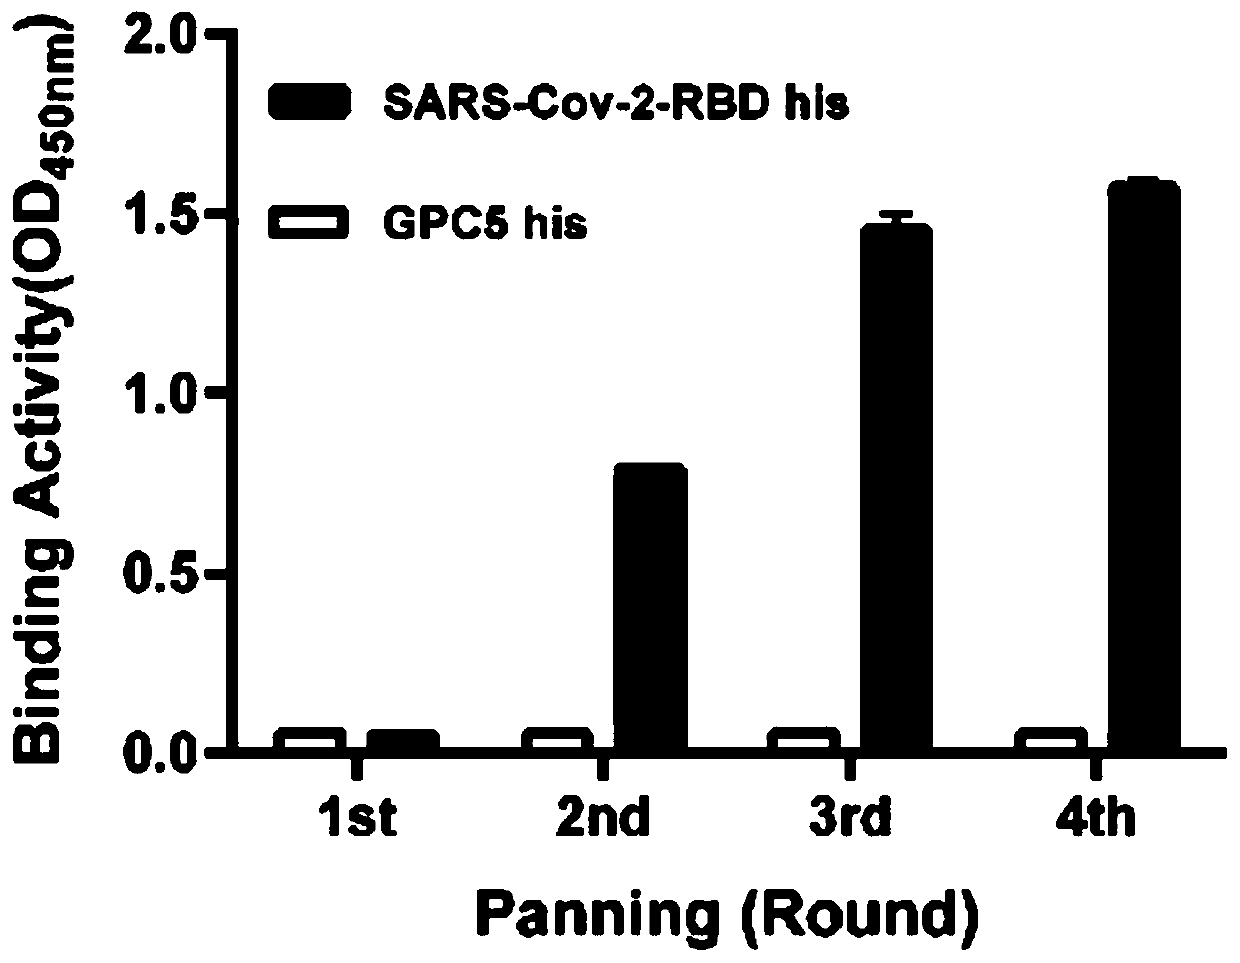 Neutralizing antibody for resisting novel coronavirus SARS-Cov-2 and application thereof